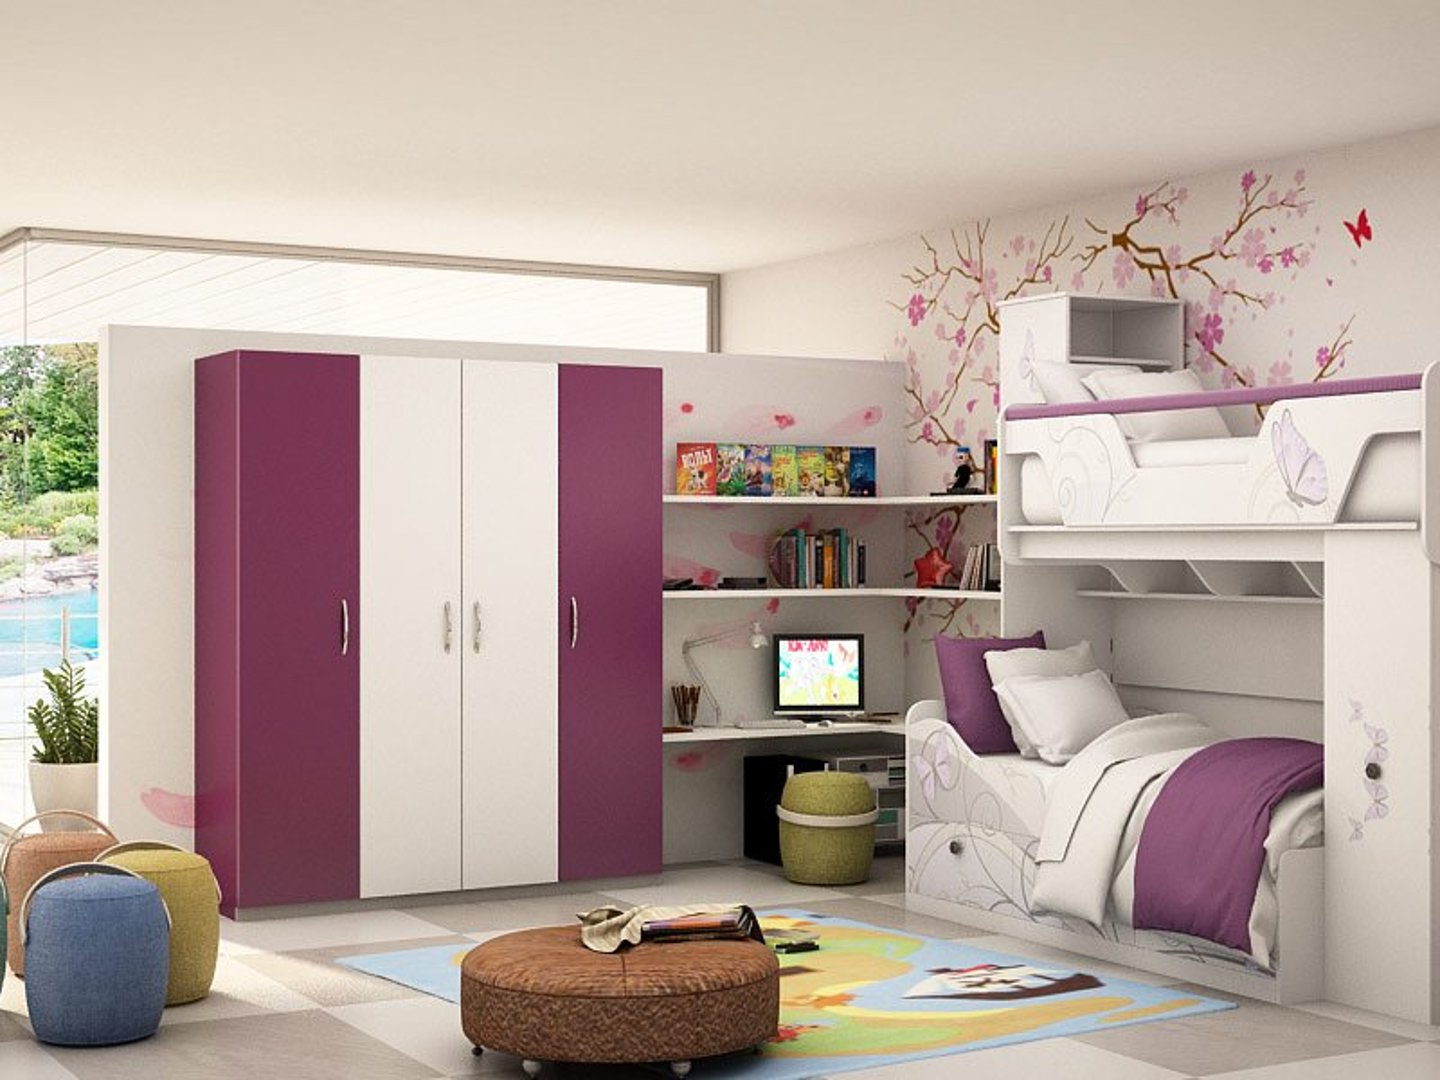 Wardrobe Colour Combinations For Your Bedroom Décor  HomeLane Blog